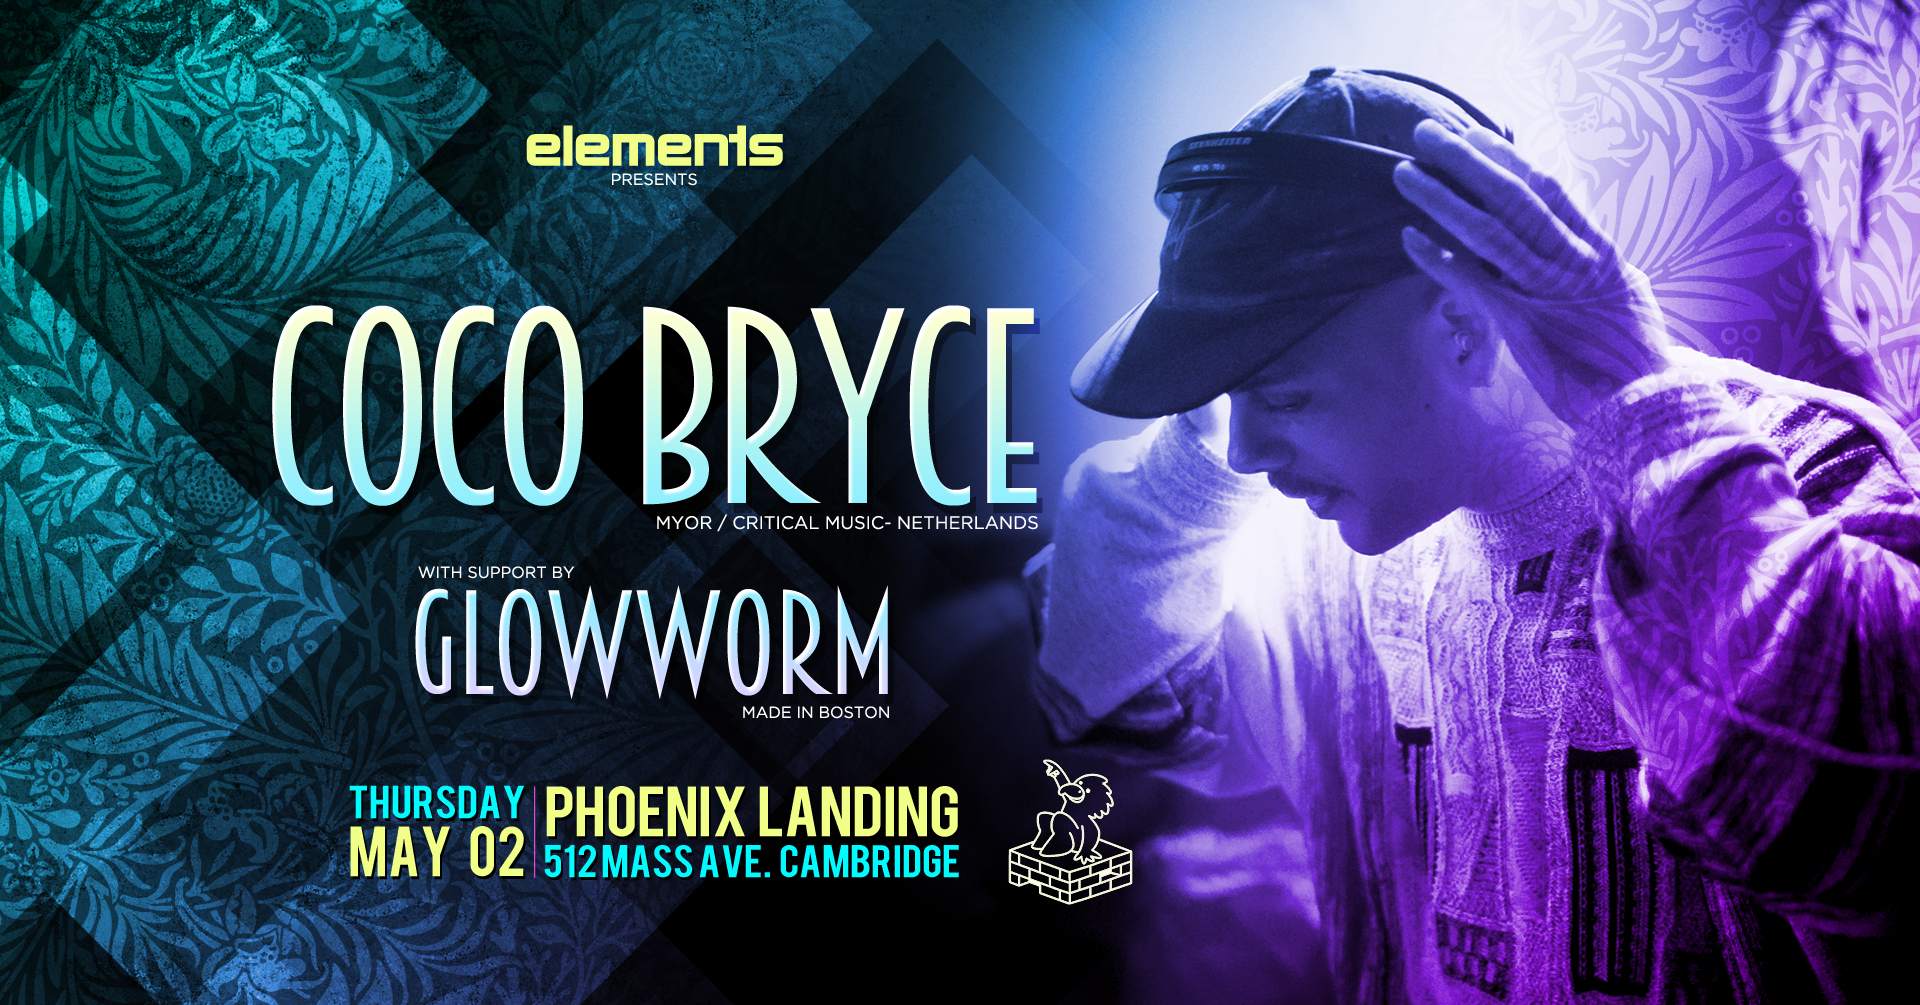 elements - Coco Bryce, DJ Glowworm, Lenore - フライヤー表